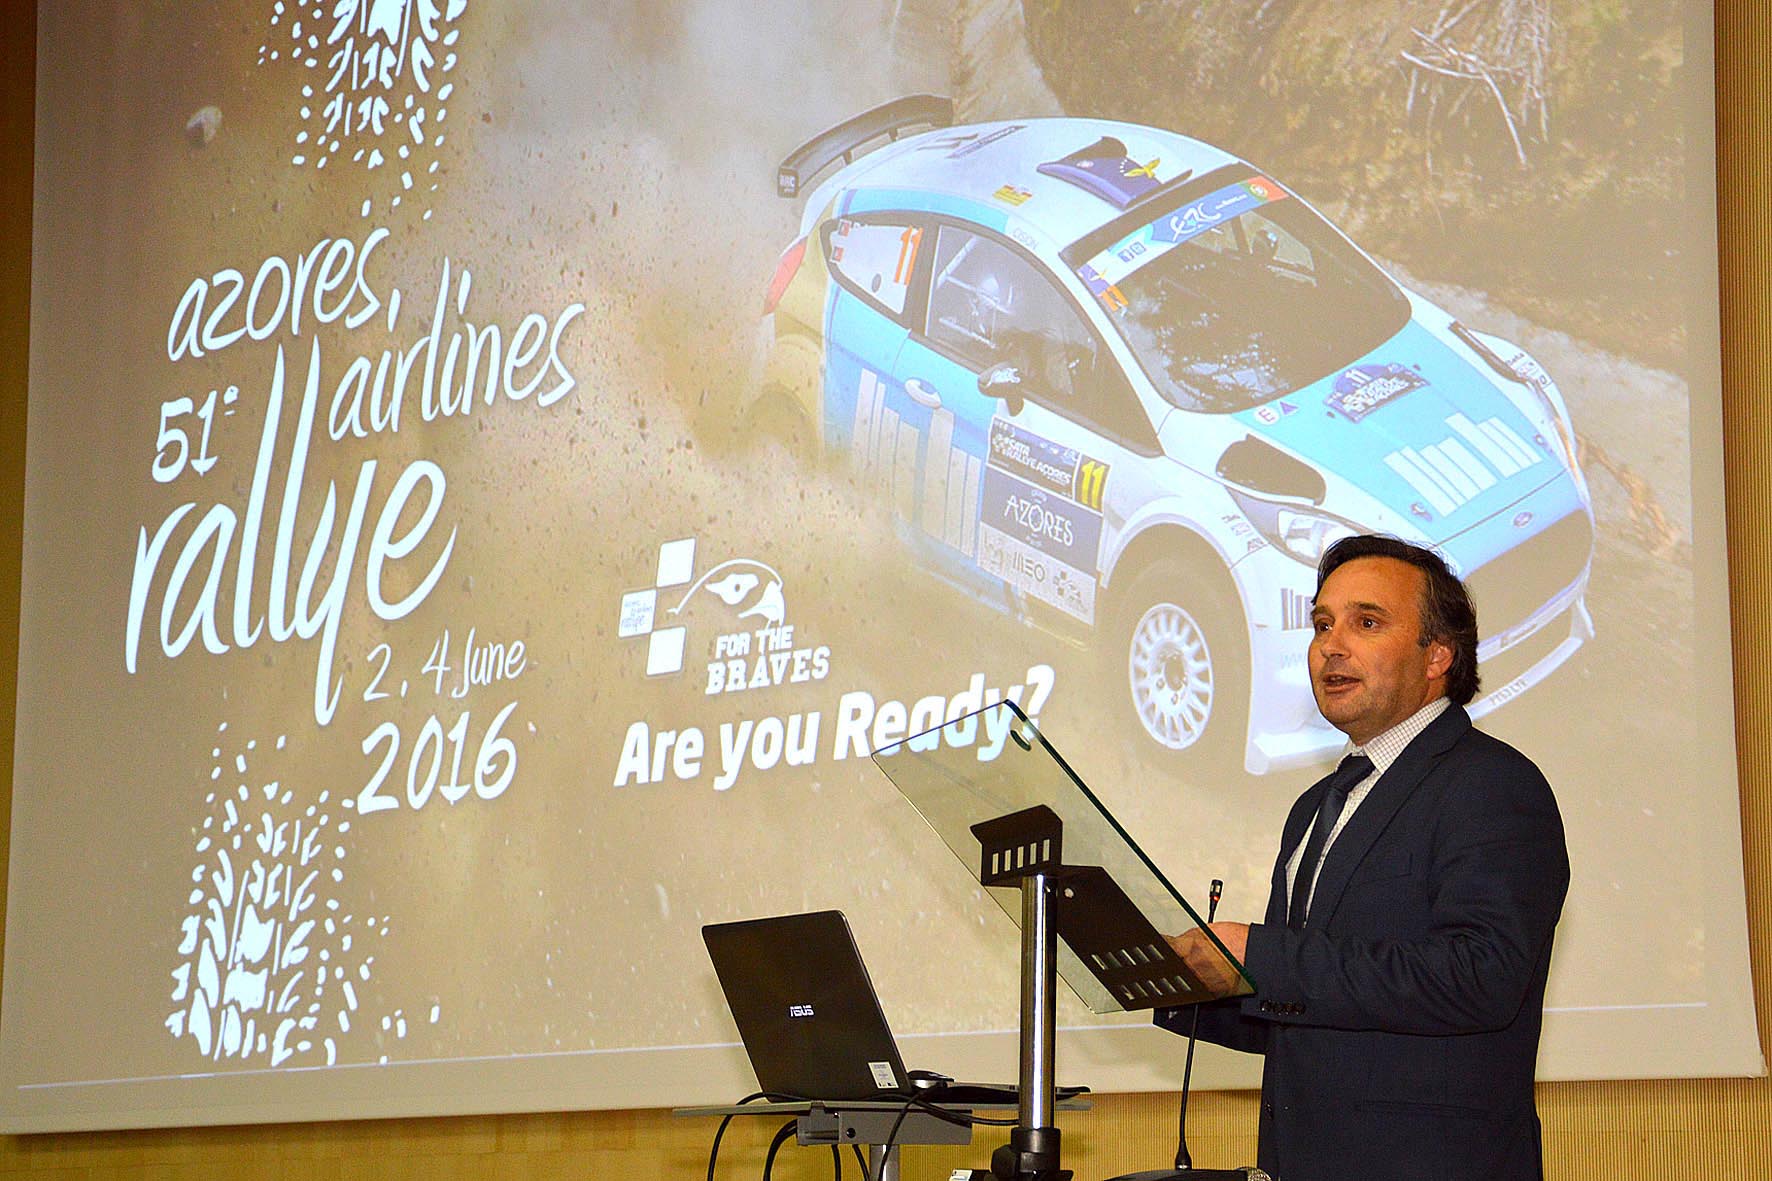 Azores Airlines Rallye demonstra capacidade dos Açores para “organizar eventos à escala global”, afirma Vítor Fraga